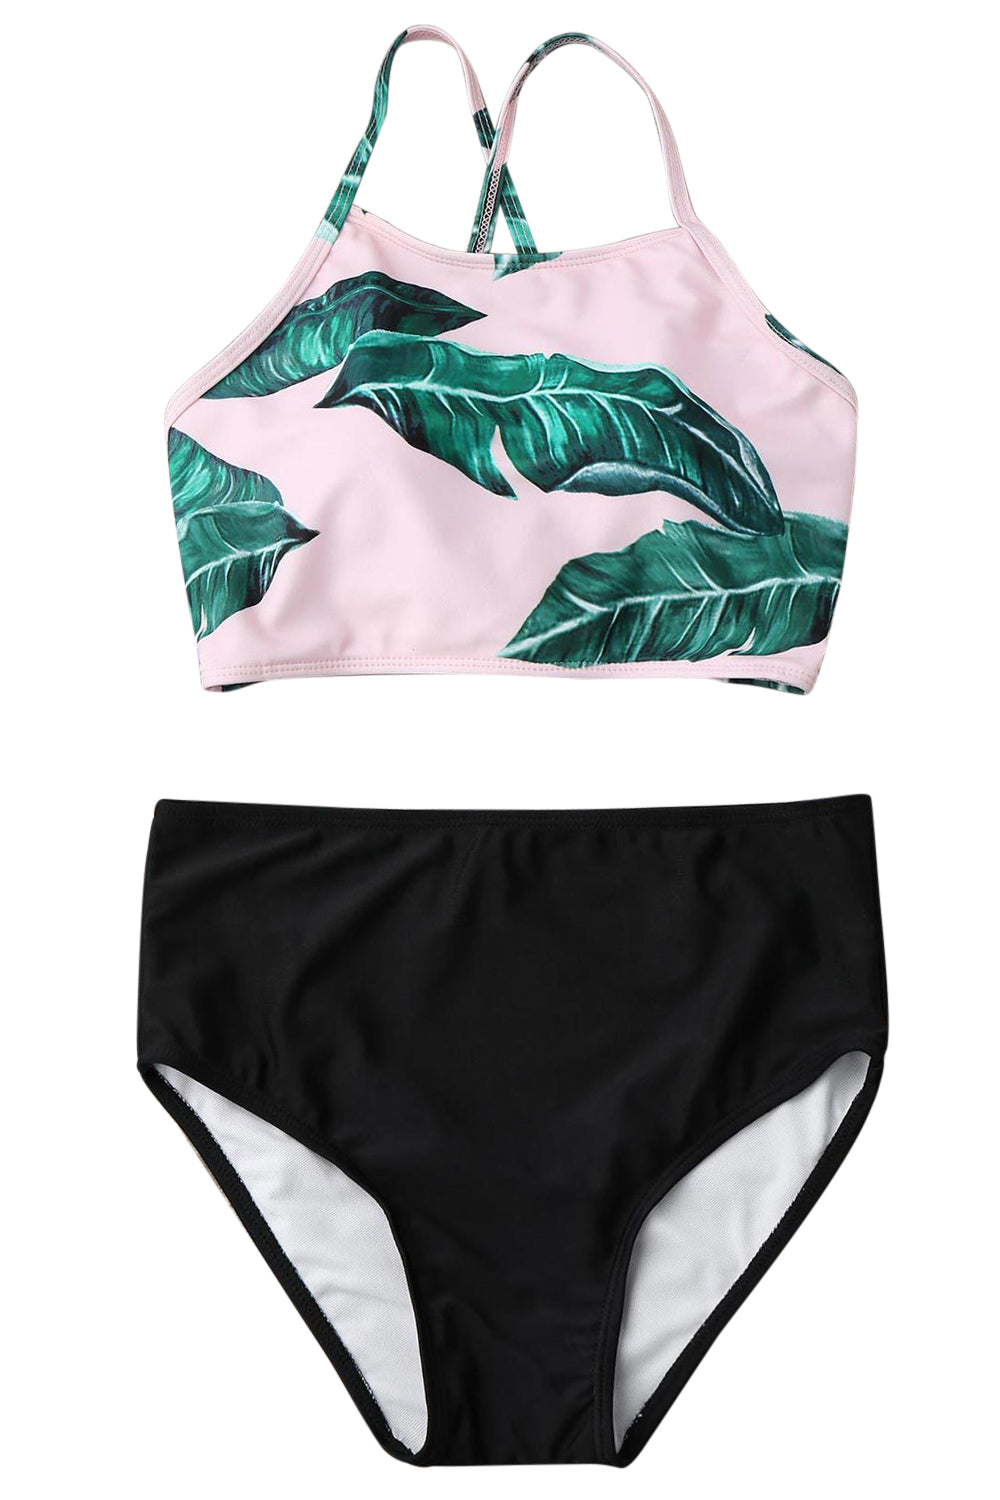 Iyasson Charming Leaves printing Tank Top Bikini Set